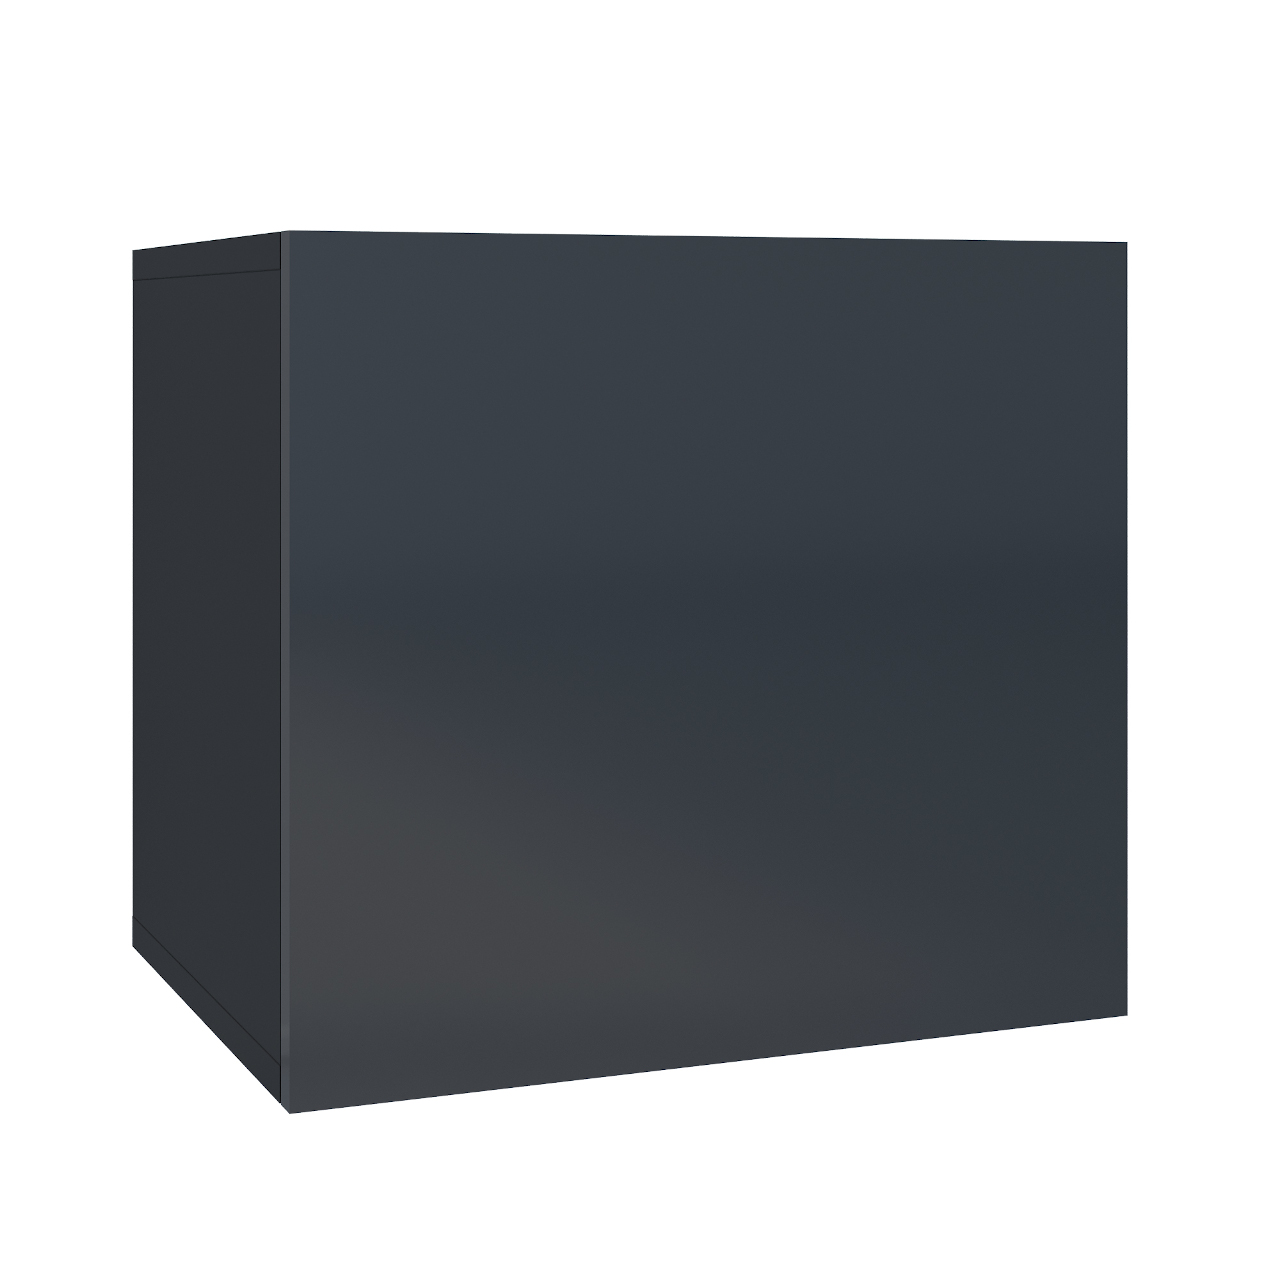 Závěsná skříňka malá ONYX ON1B černý lesk